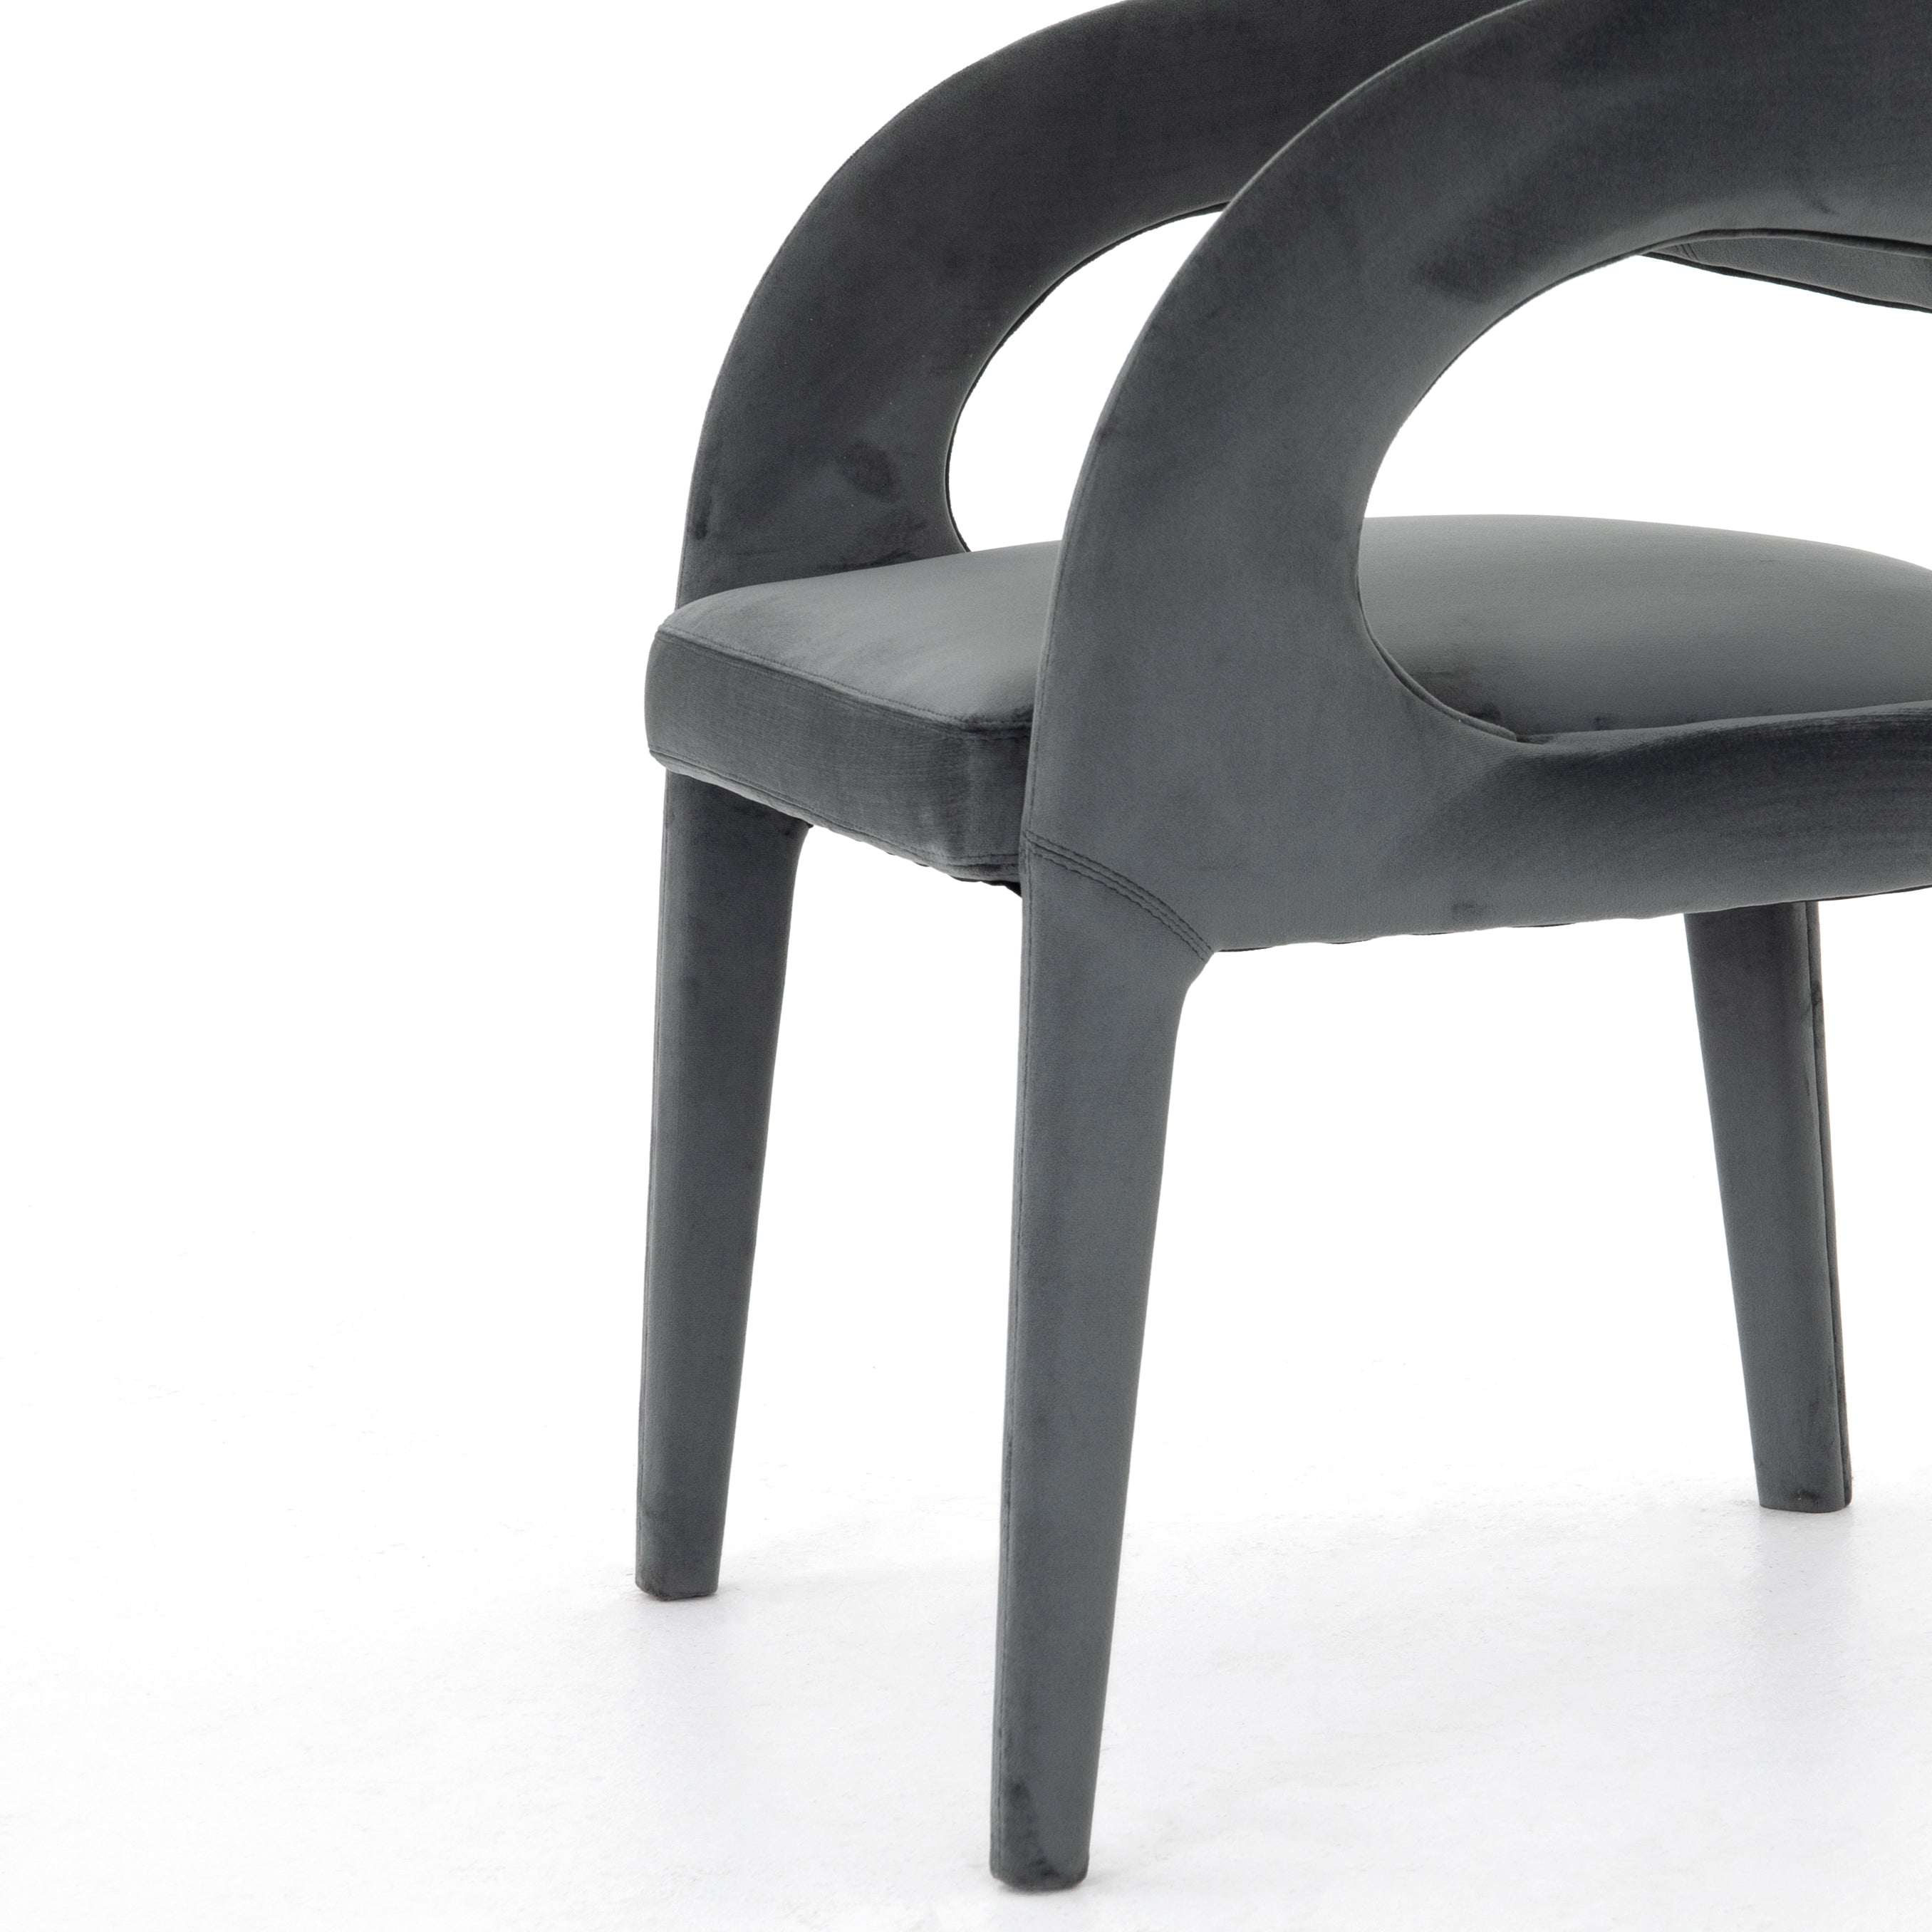 Charcoal Velvet Fabric | Hawkins Dining Chair | Valley Ridge Furniture